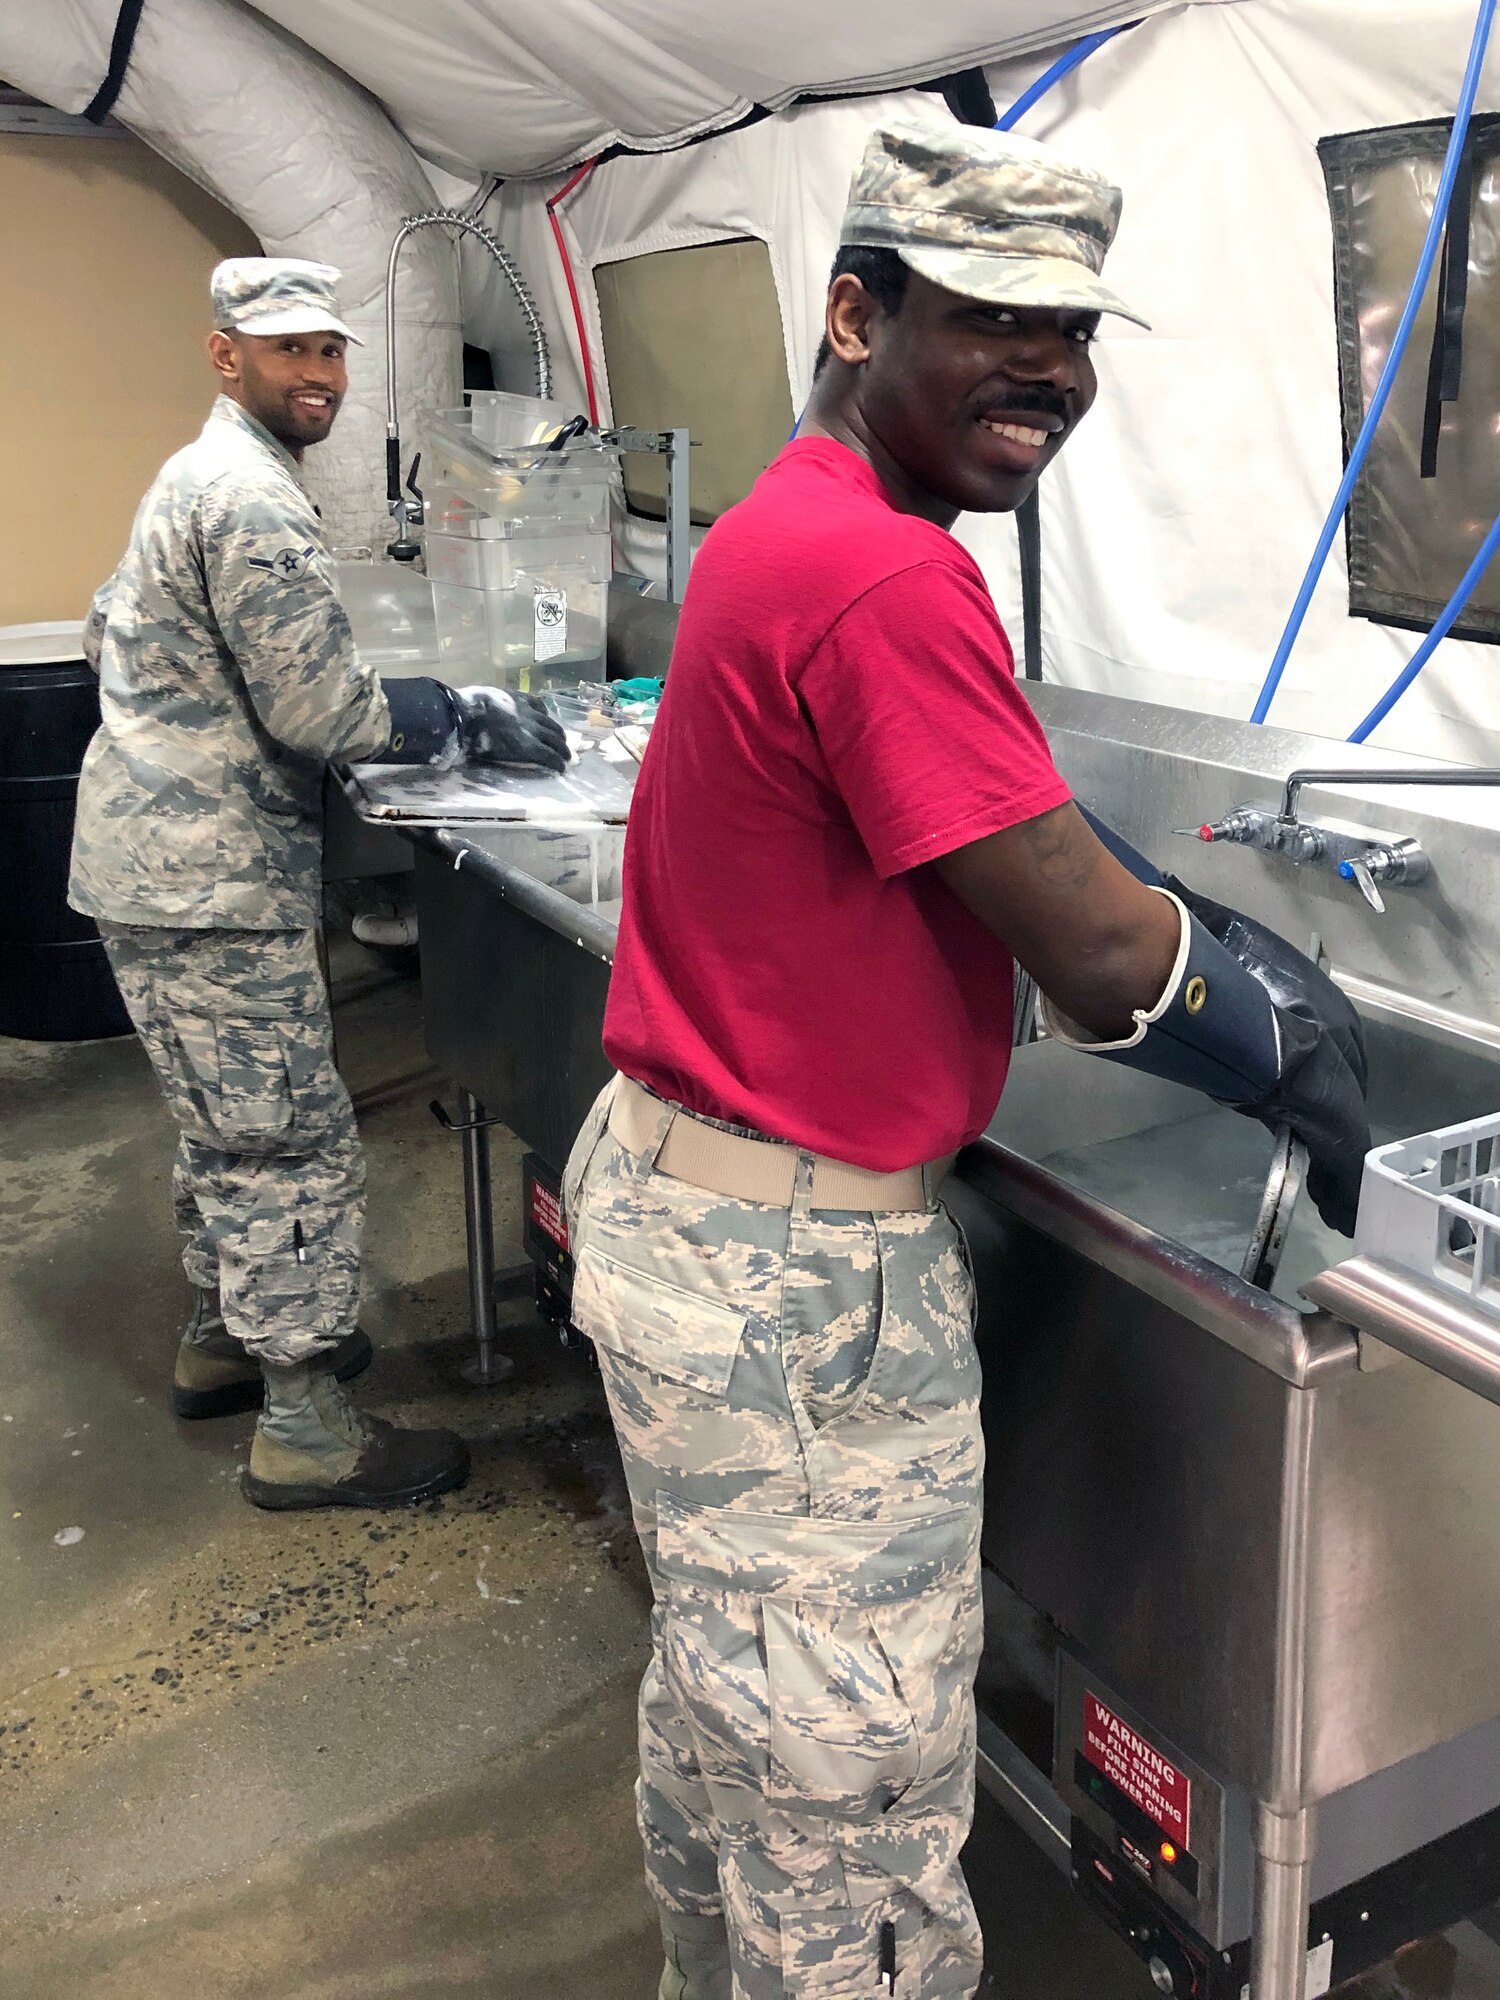 Two airmen washing dishes.